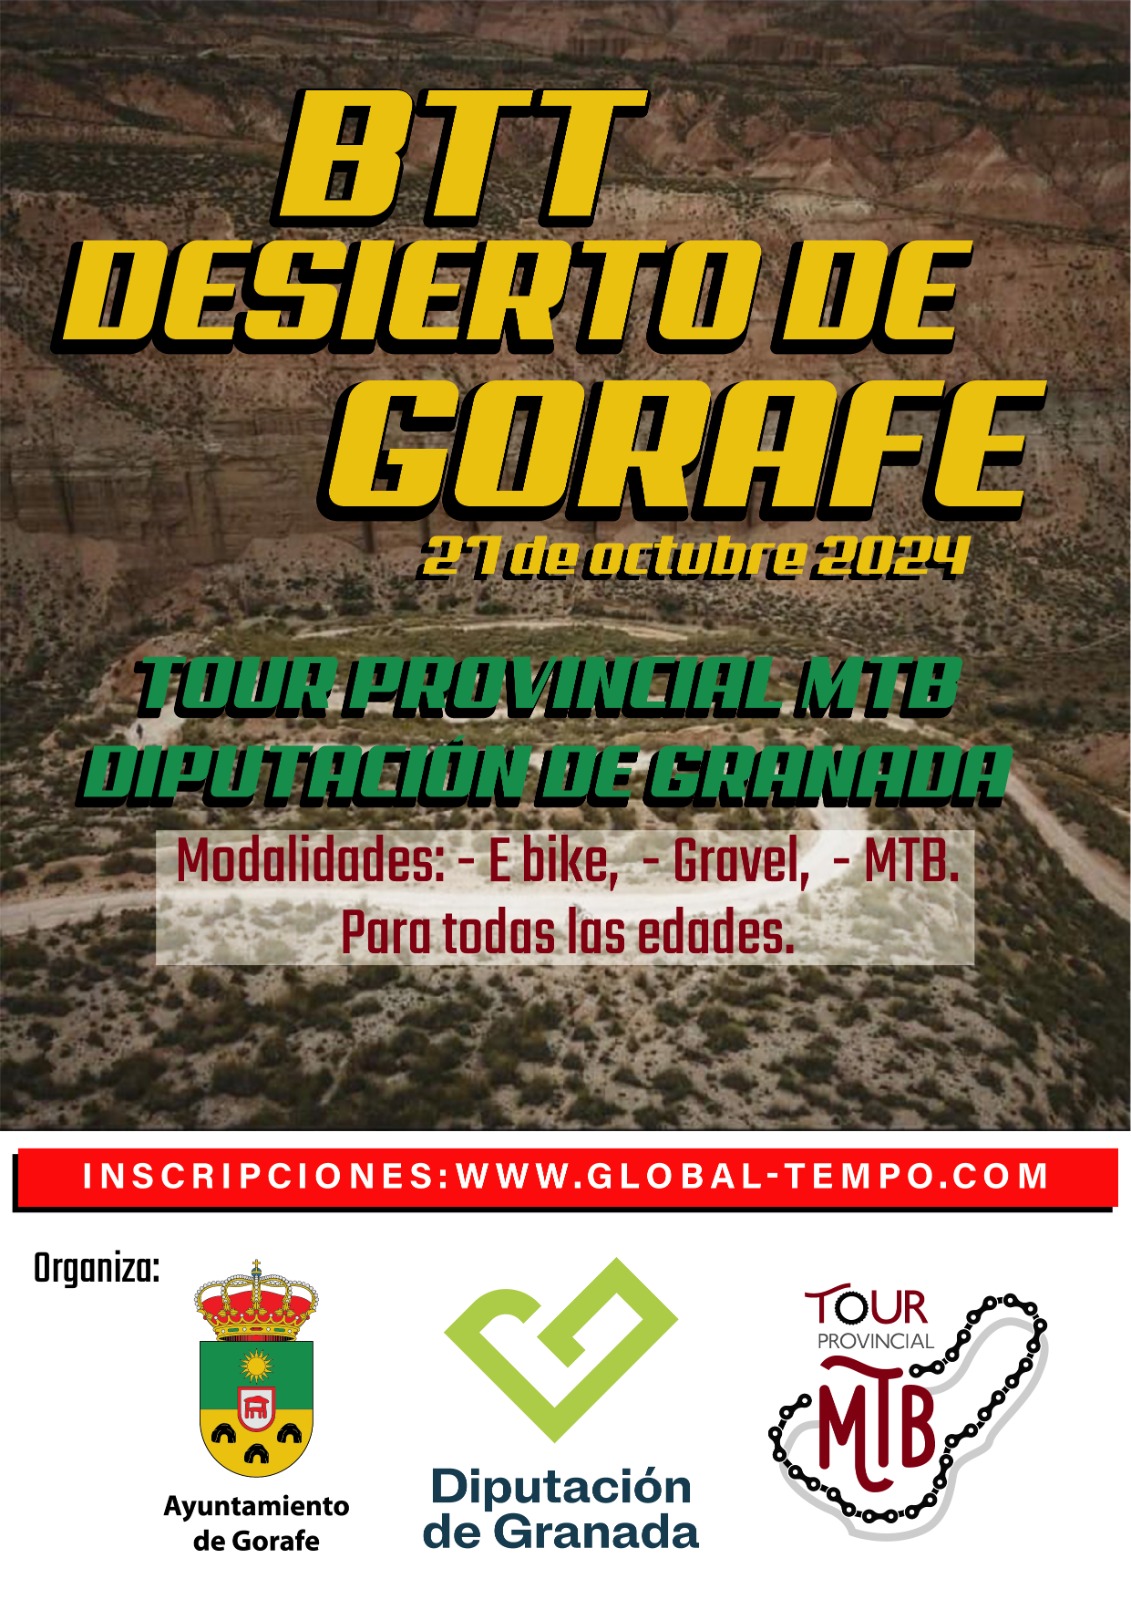 TOUR PROVINCIAL MTB DIPUTACIN DE GRANADA - DESIERTO DE GORAFE